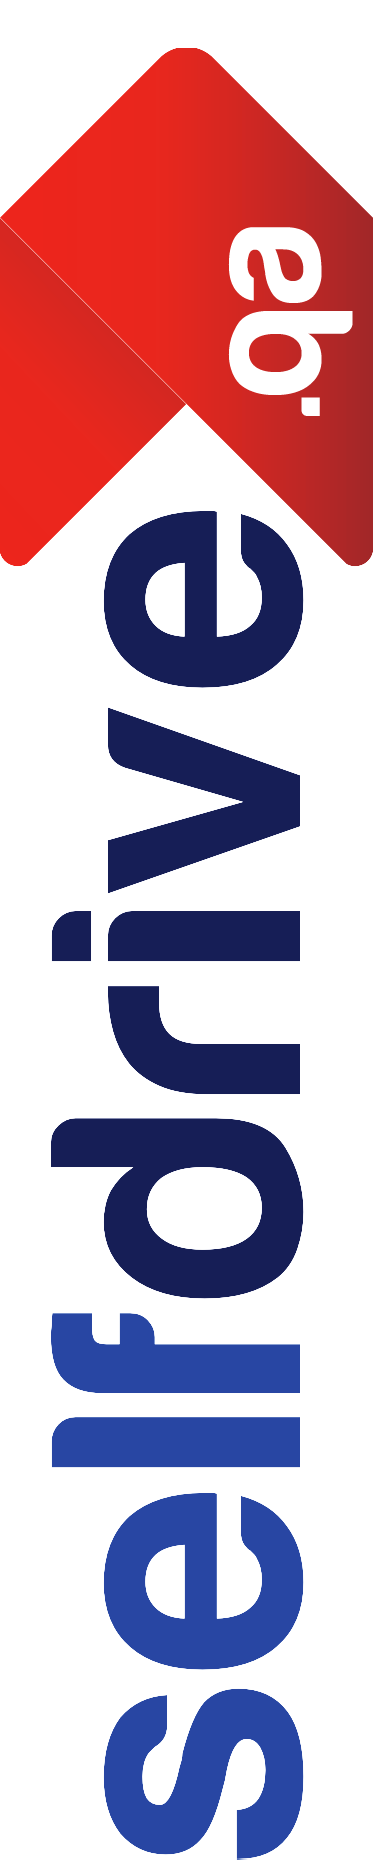 Selfdrive Logo